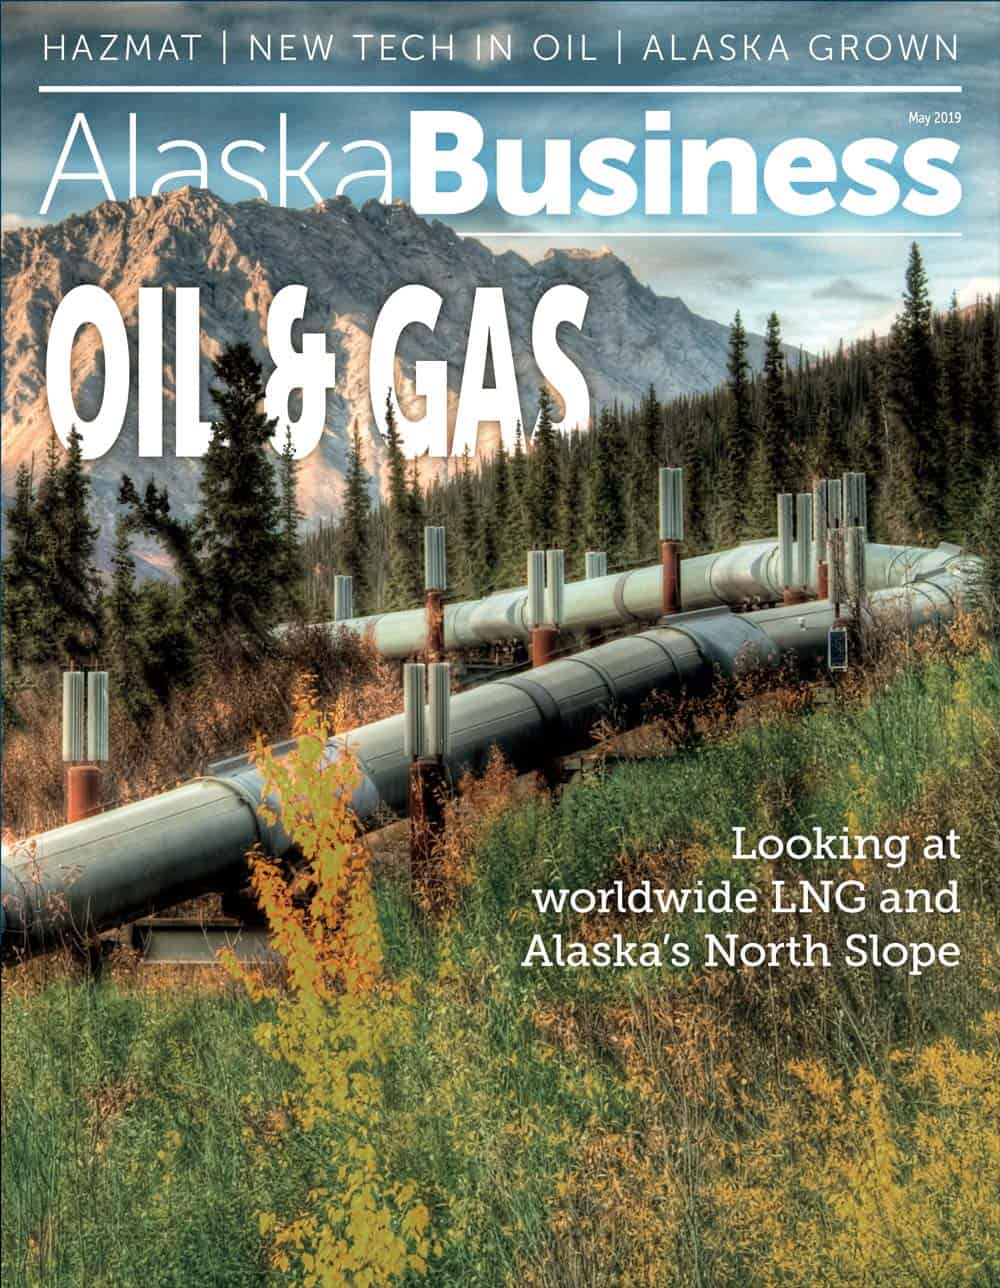 Alaska Business Magazine May 2019 cover